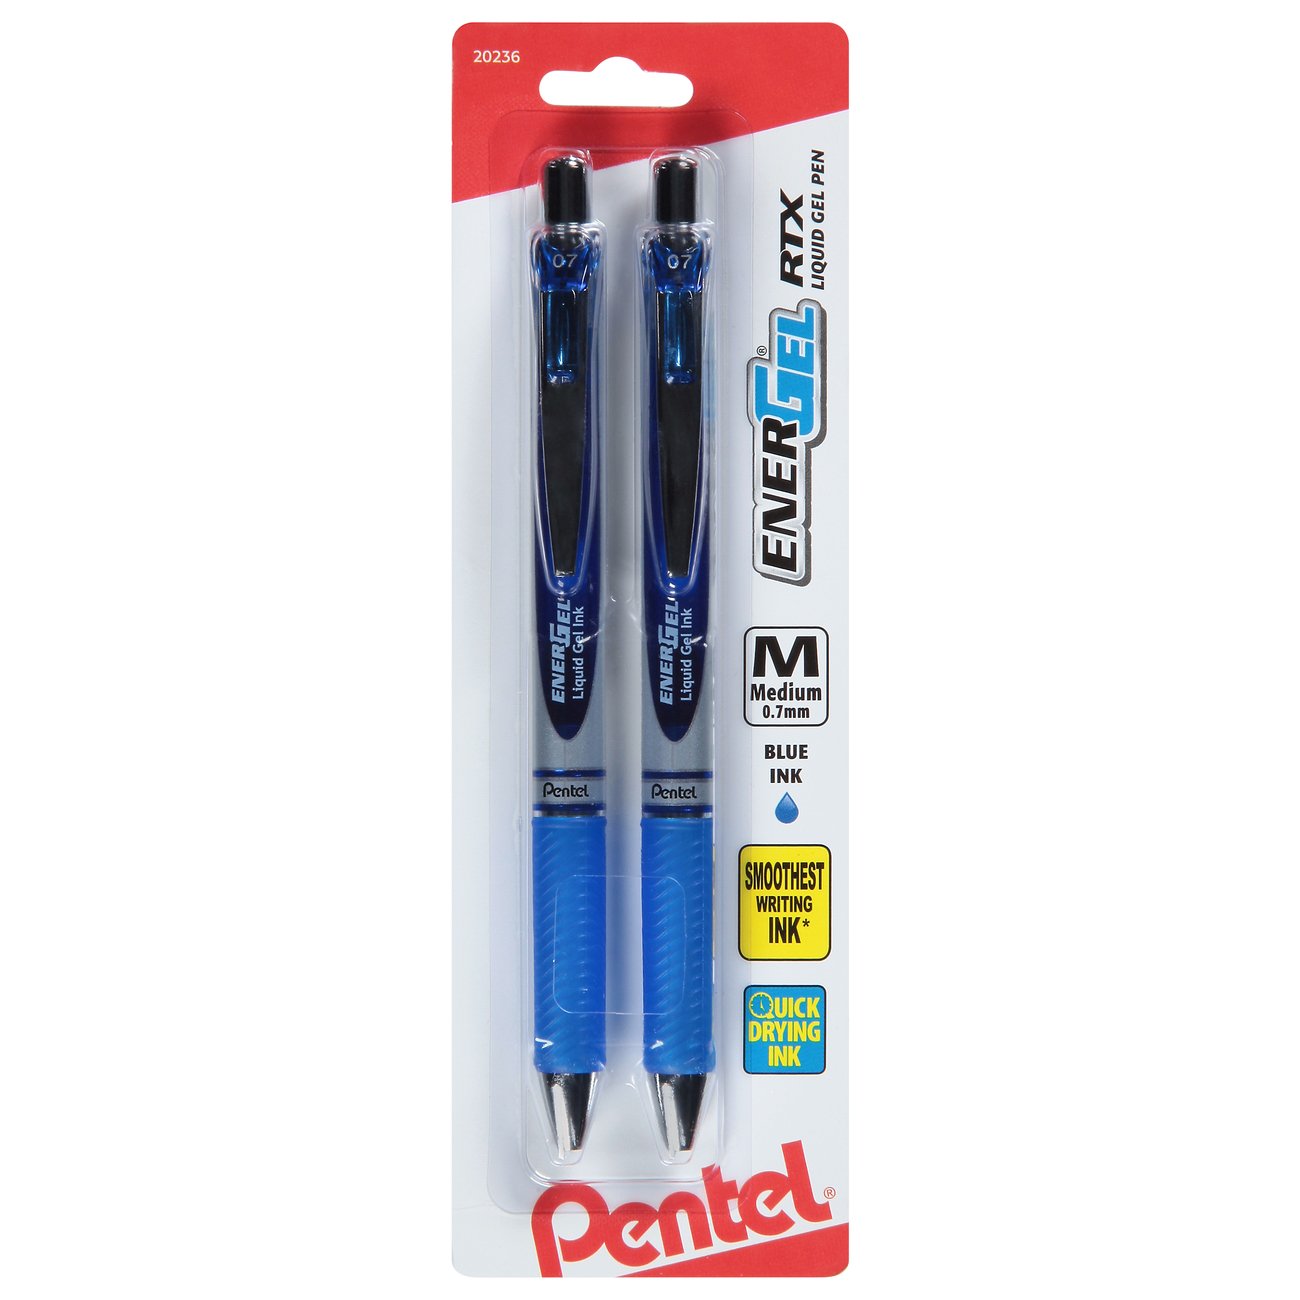 uniball 207 Medium Point Gel Pens - Black Ink - Shop Pens at H-E-B